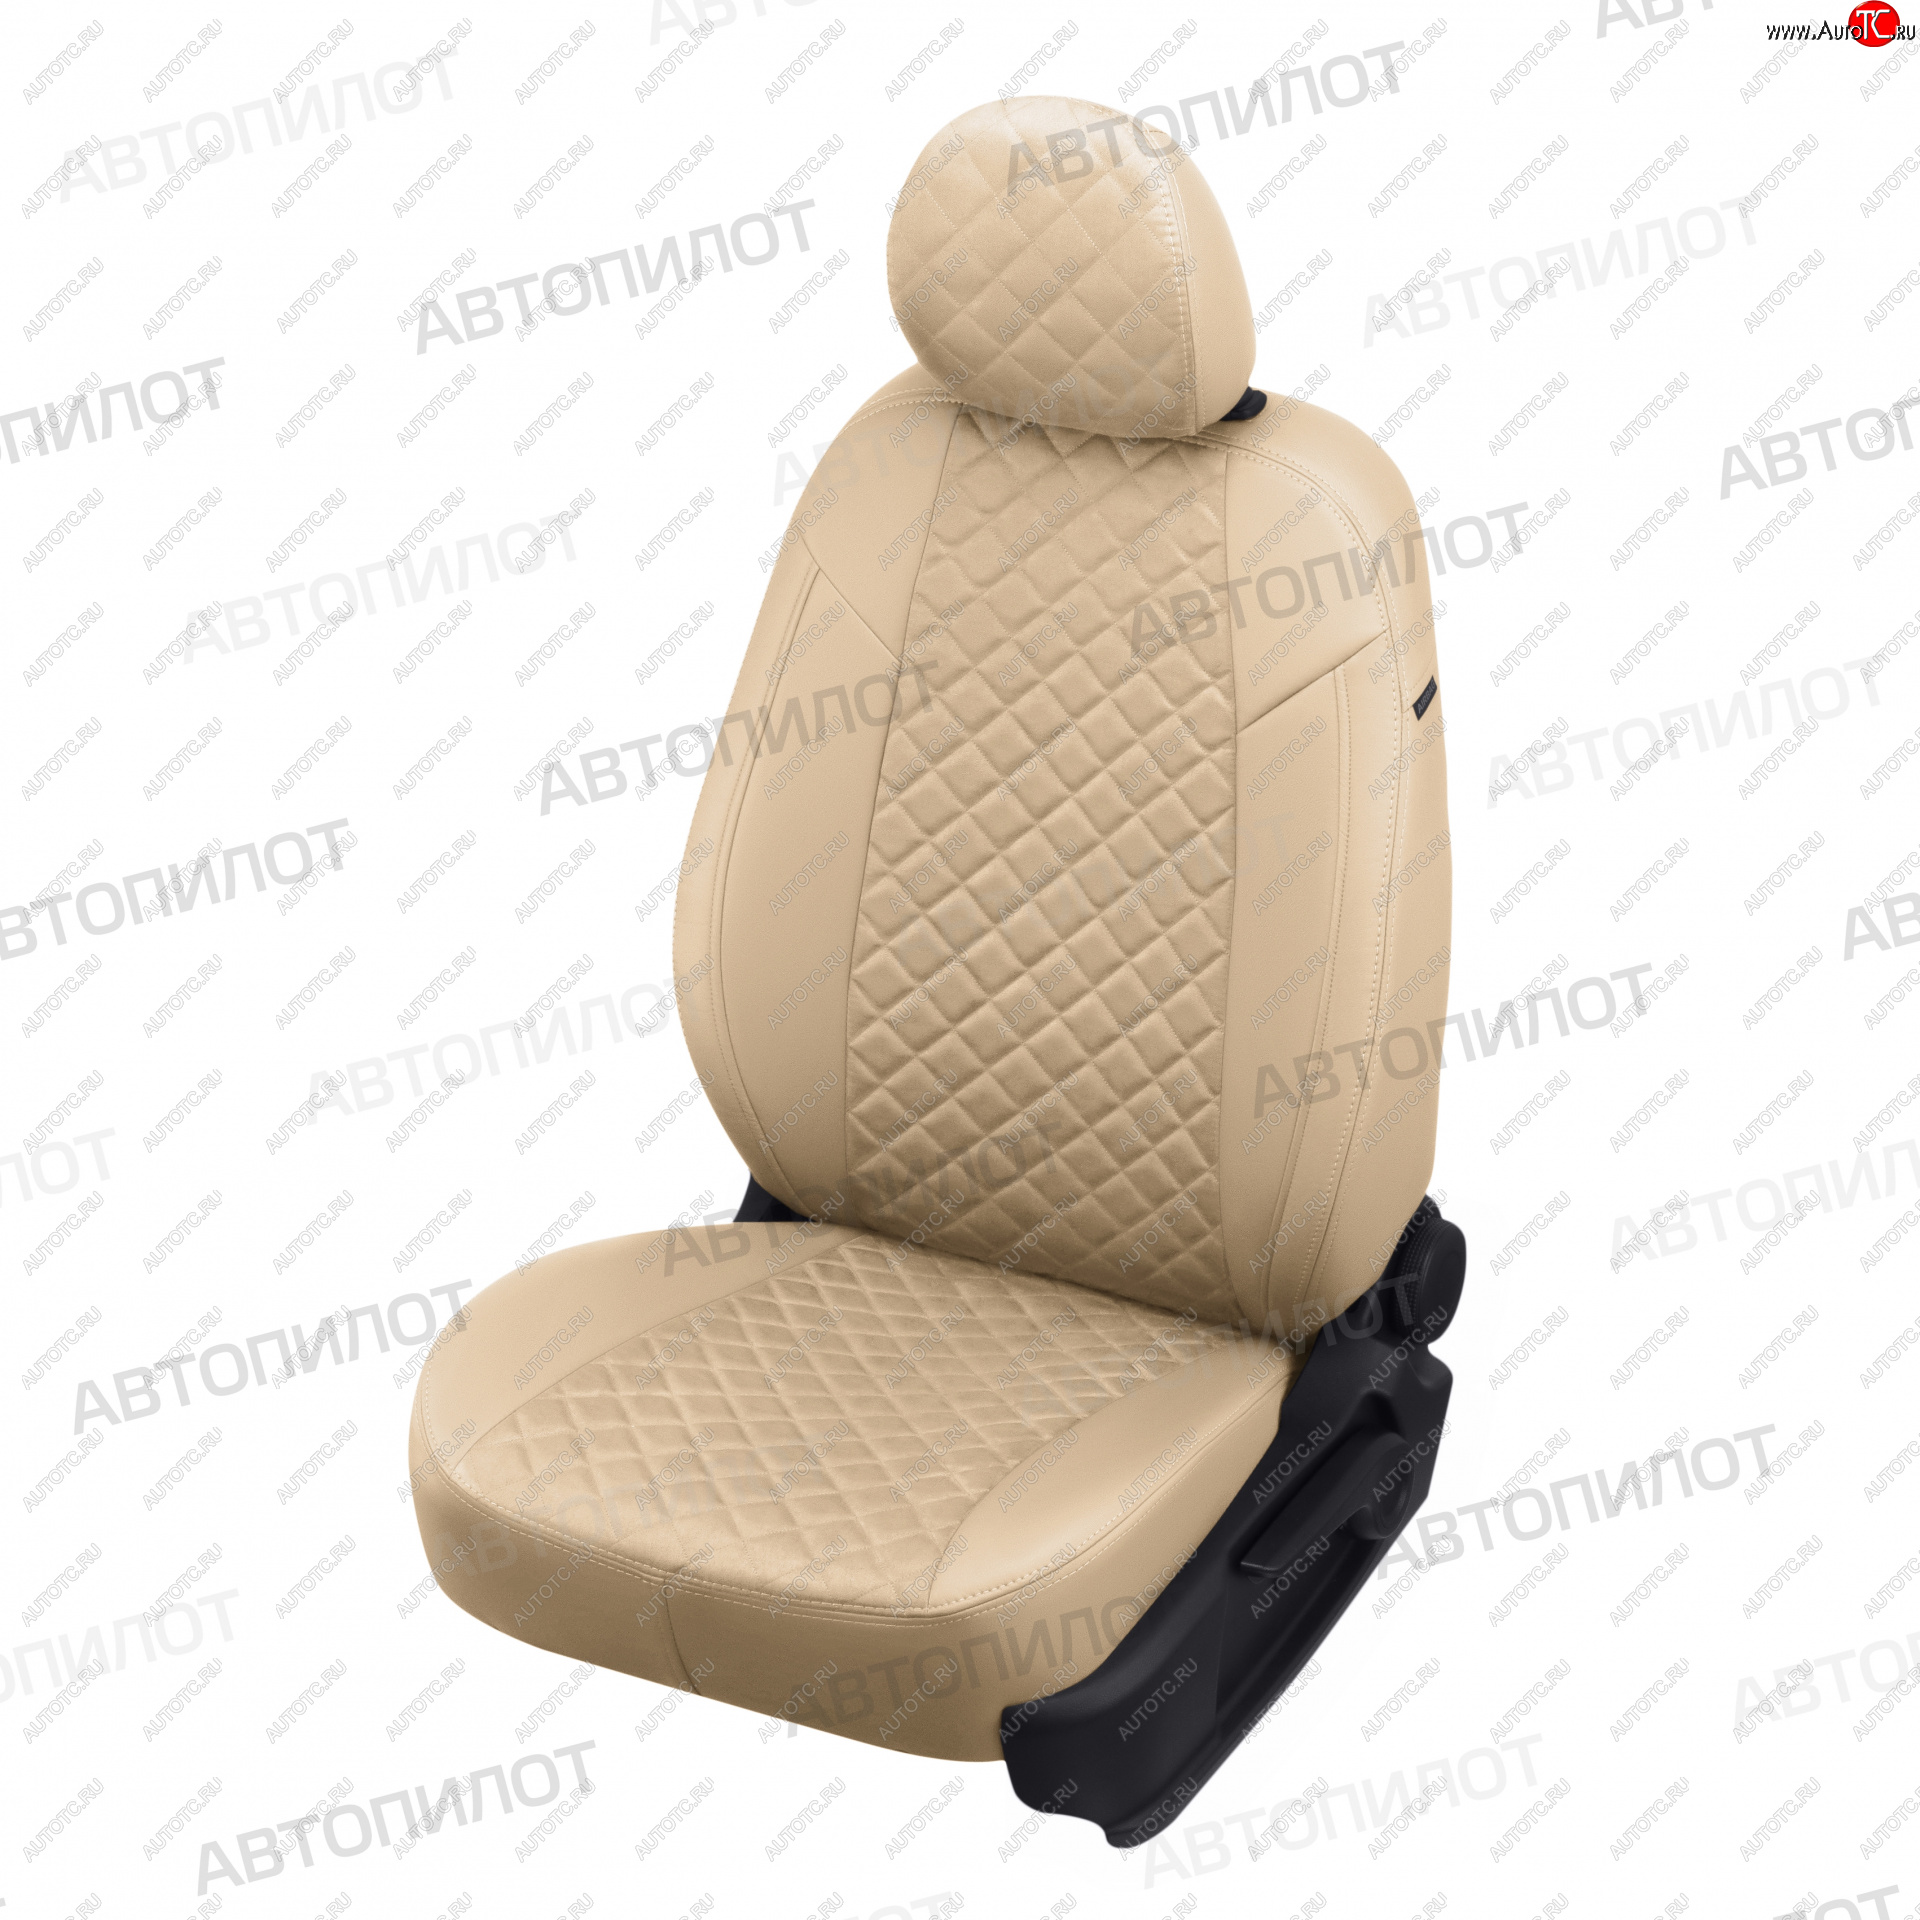 7 799 р. Чехлы сидений (экокожа/алькантара, зад. сид. 40/60) Автопилот Ромб  Hyundai Getz  TB (2002-2010) (бежевый)